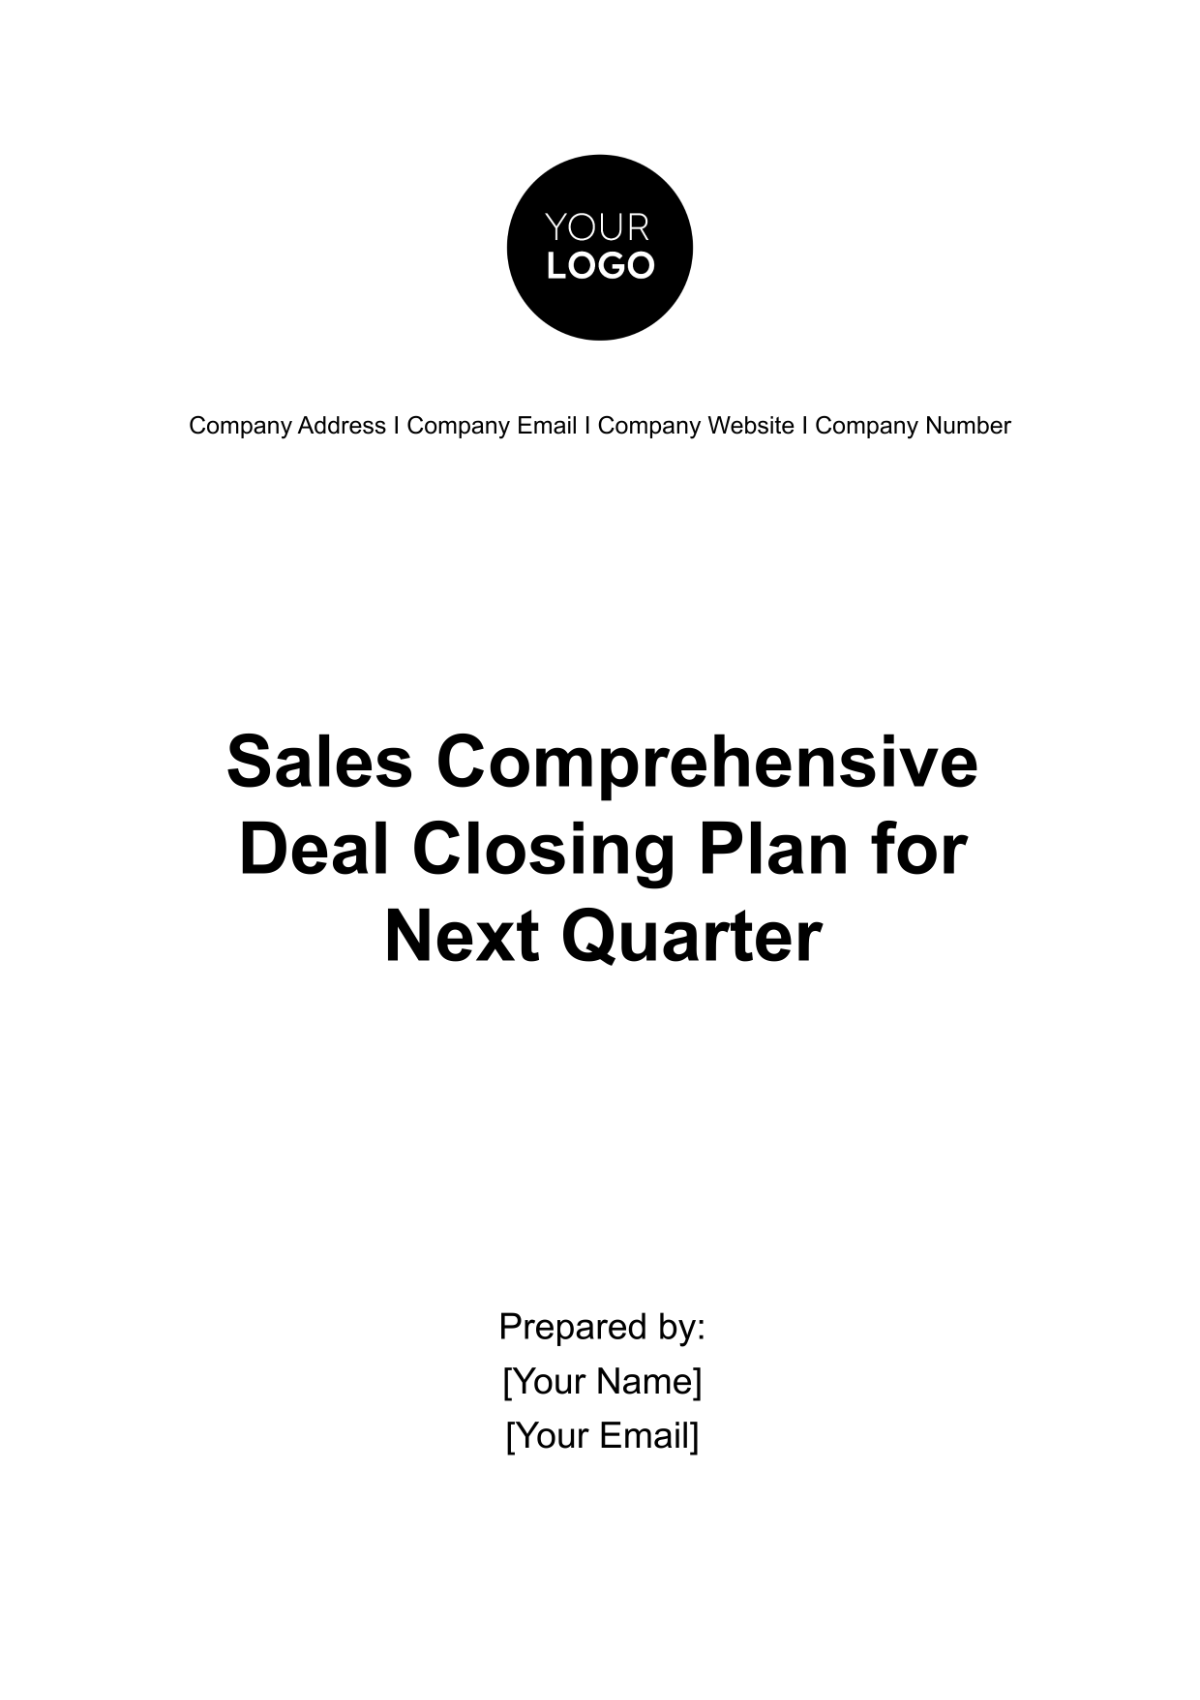 Free Sales Comprehensive Deal Closing Plan for Next Quarter Template